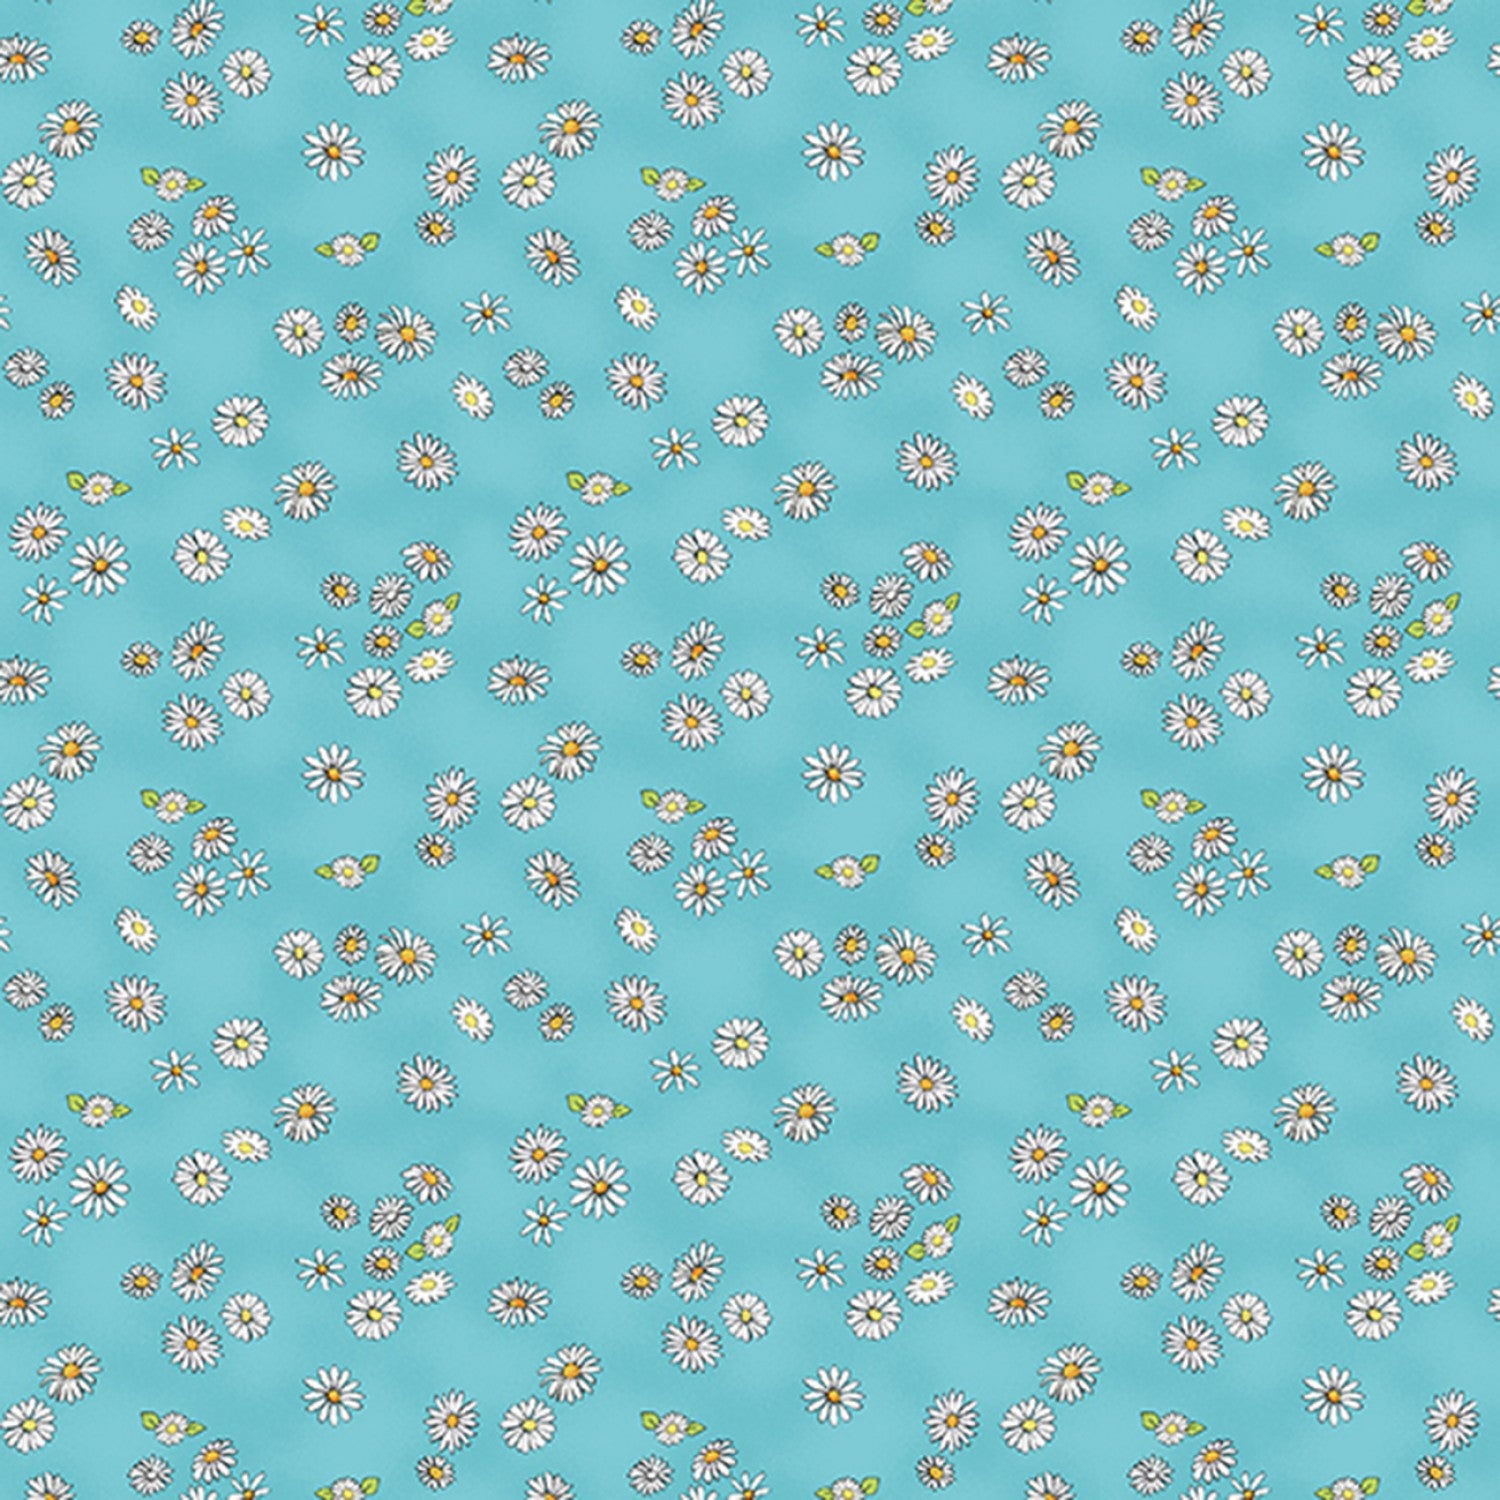 Sky Daisies Daisy Daisy  Cotton Fabric by Clothworks Y2655-98